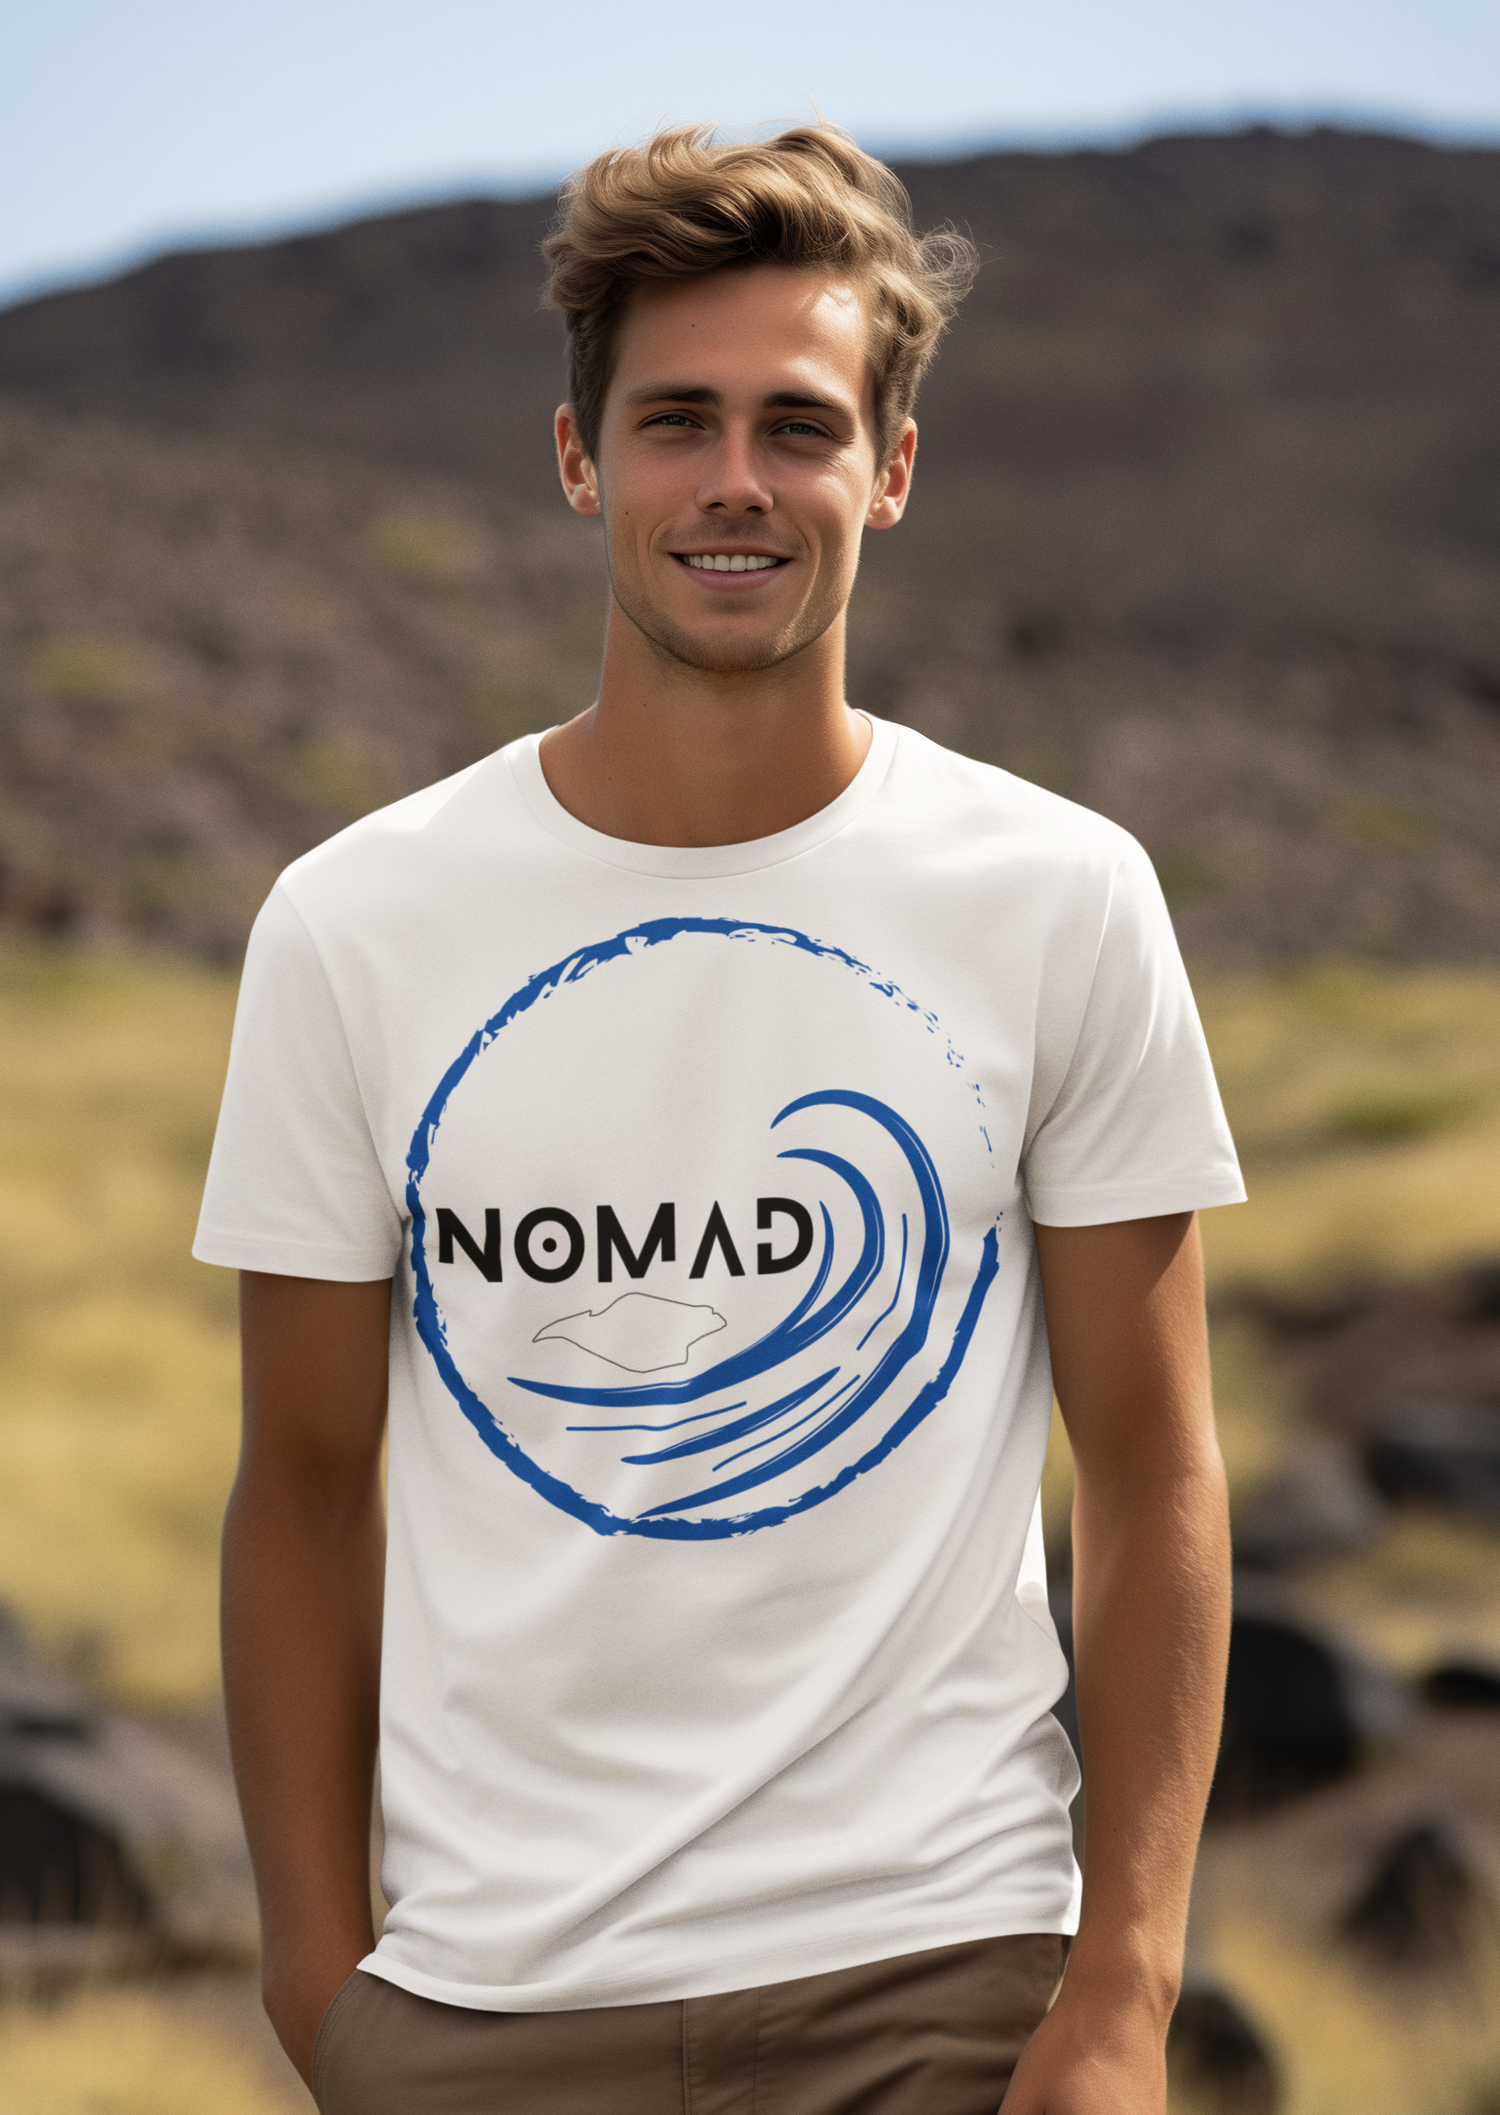 Nomad IOW